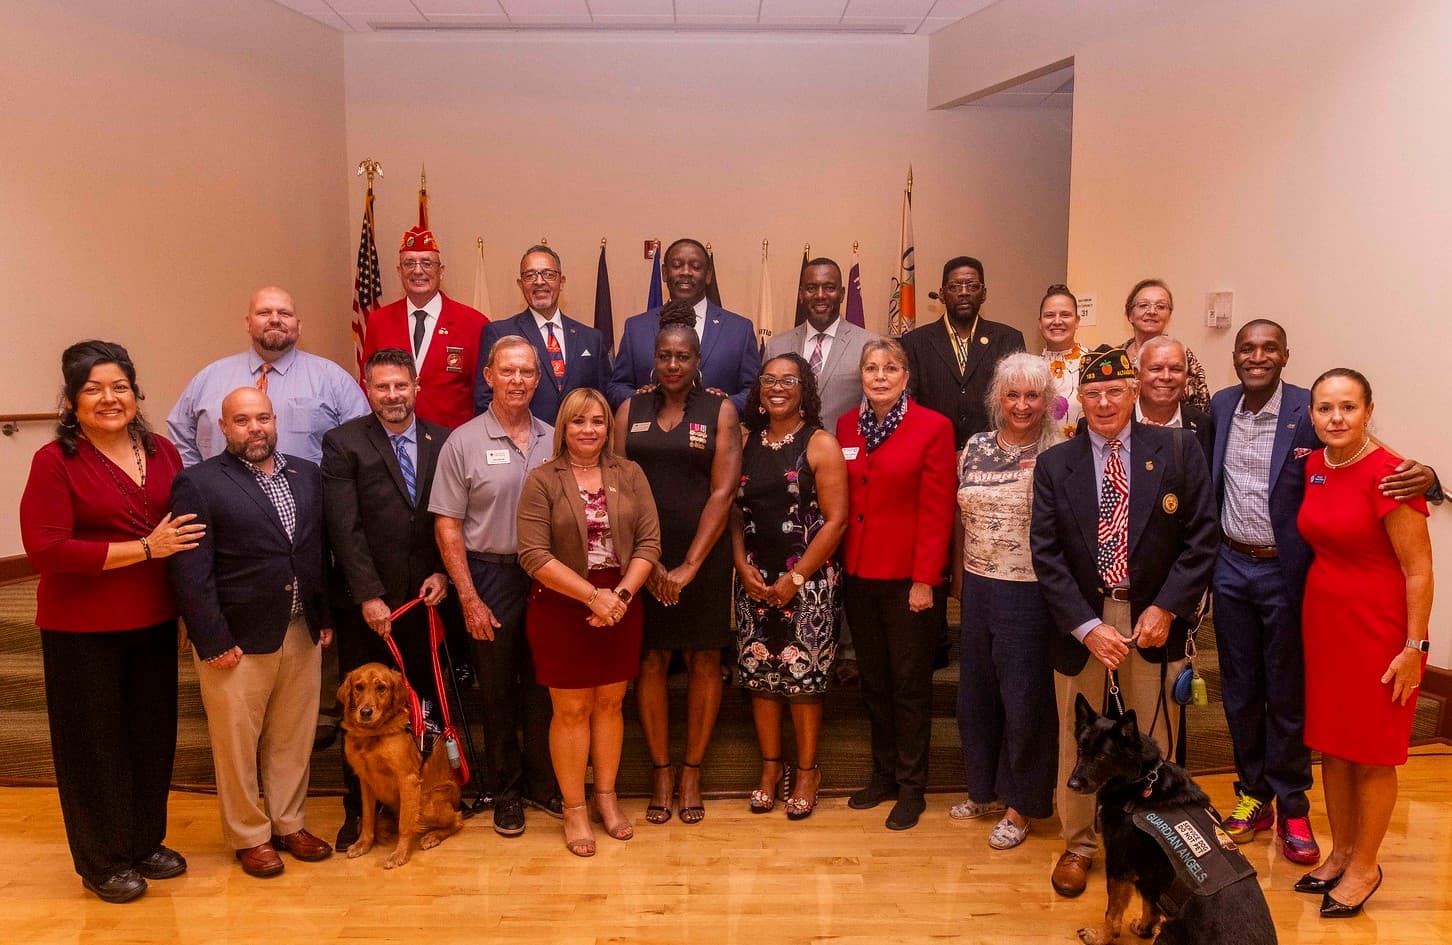 Group photo of the Orange County Mayor’s Veterans Advisory Council